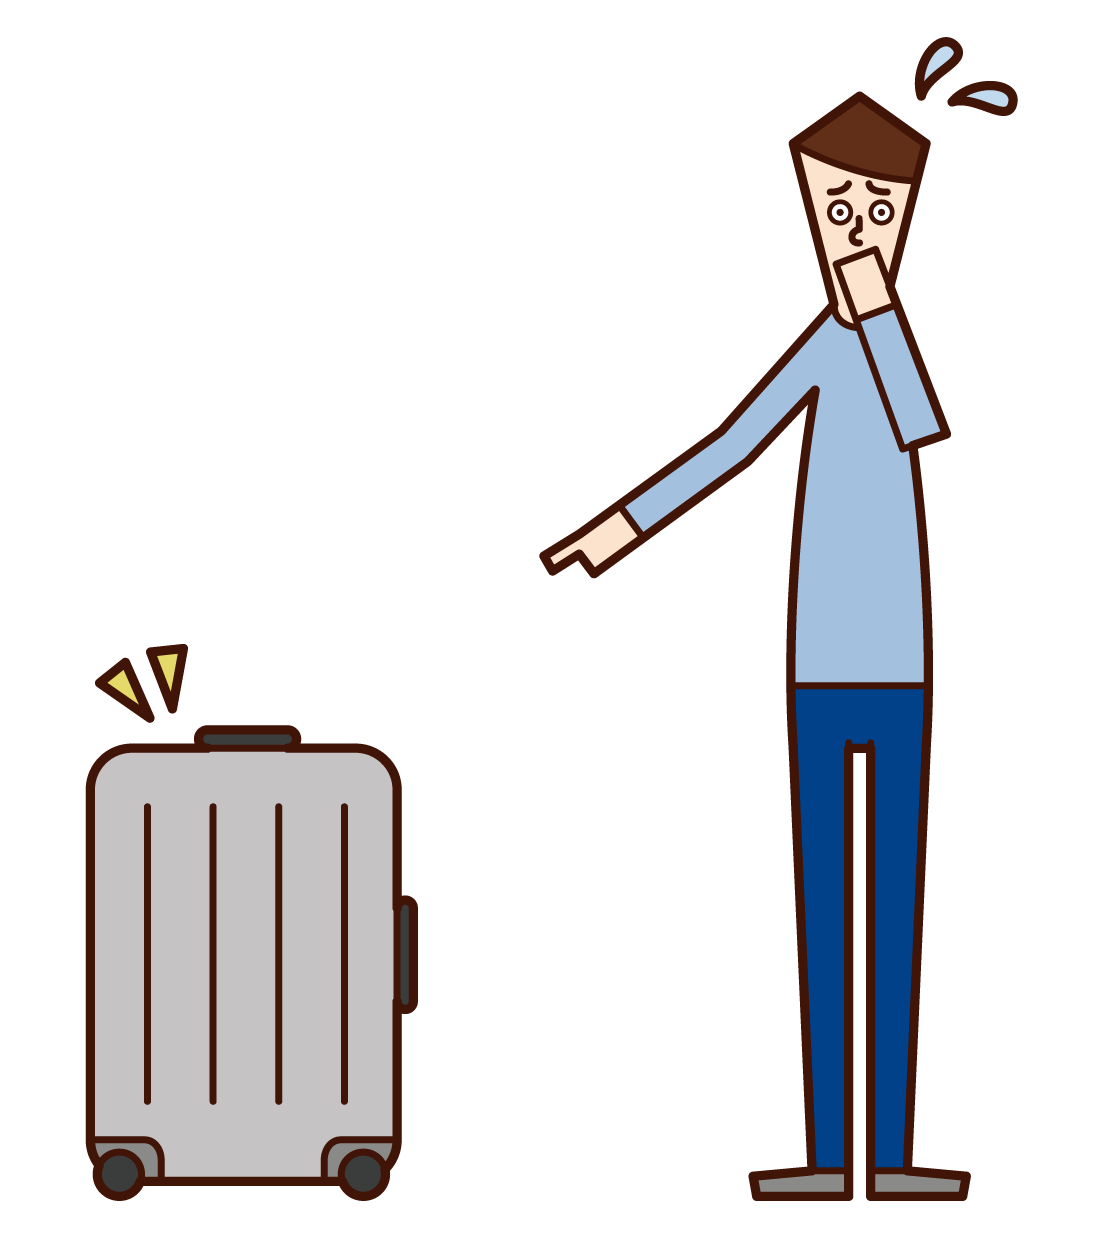 Illustration of a man who found suspicious luggage